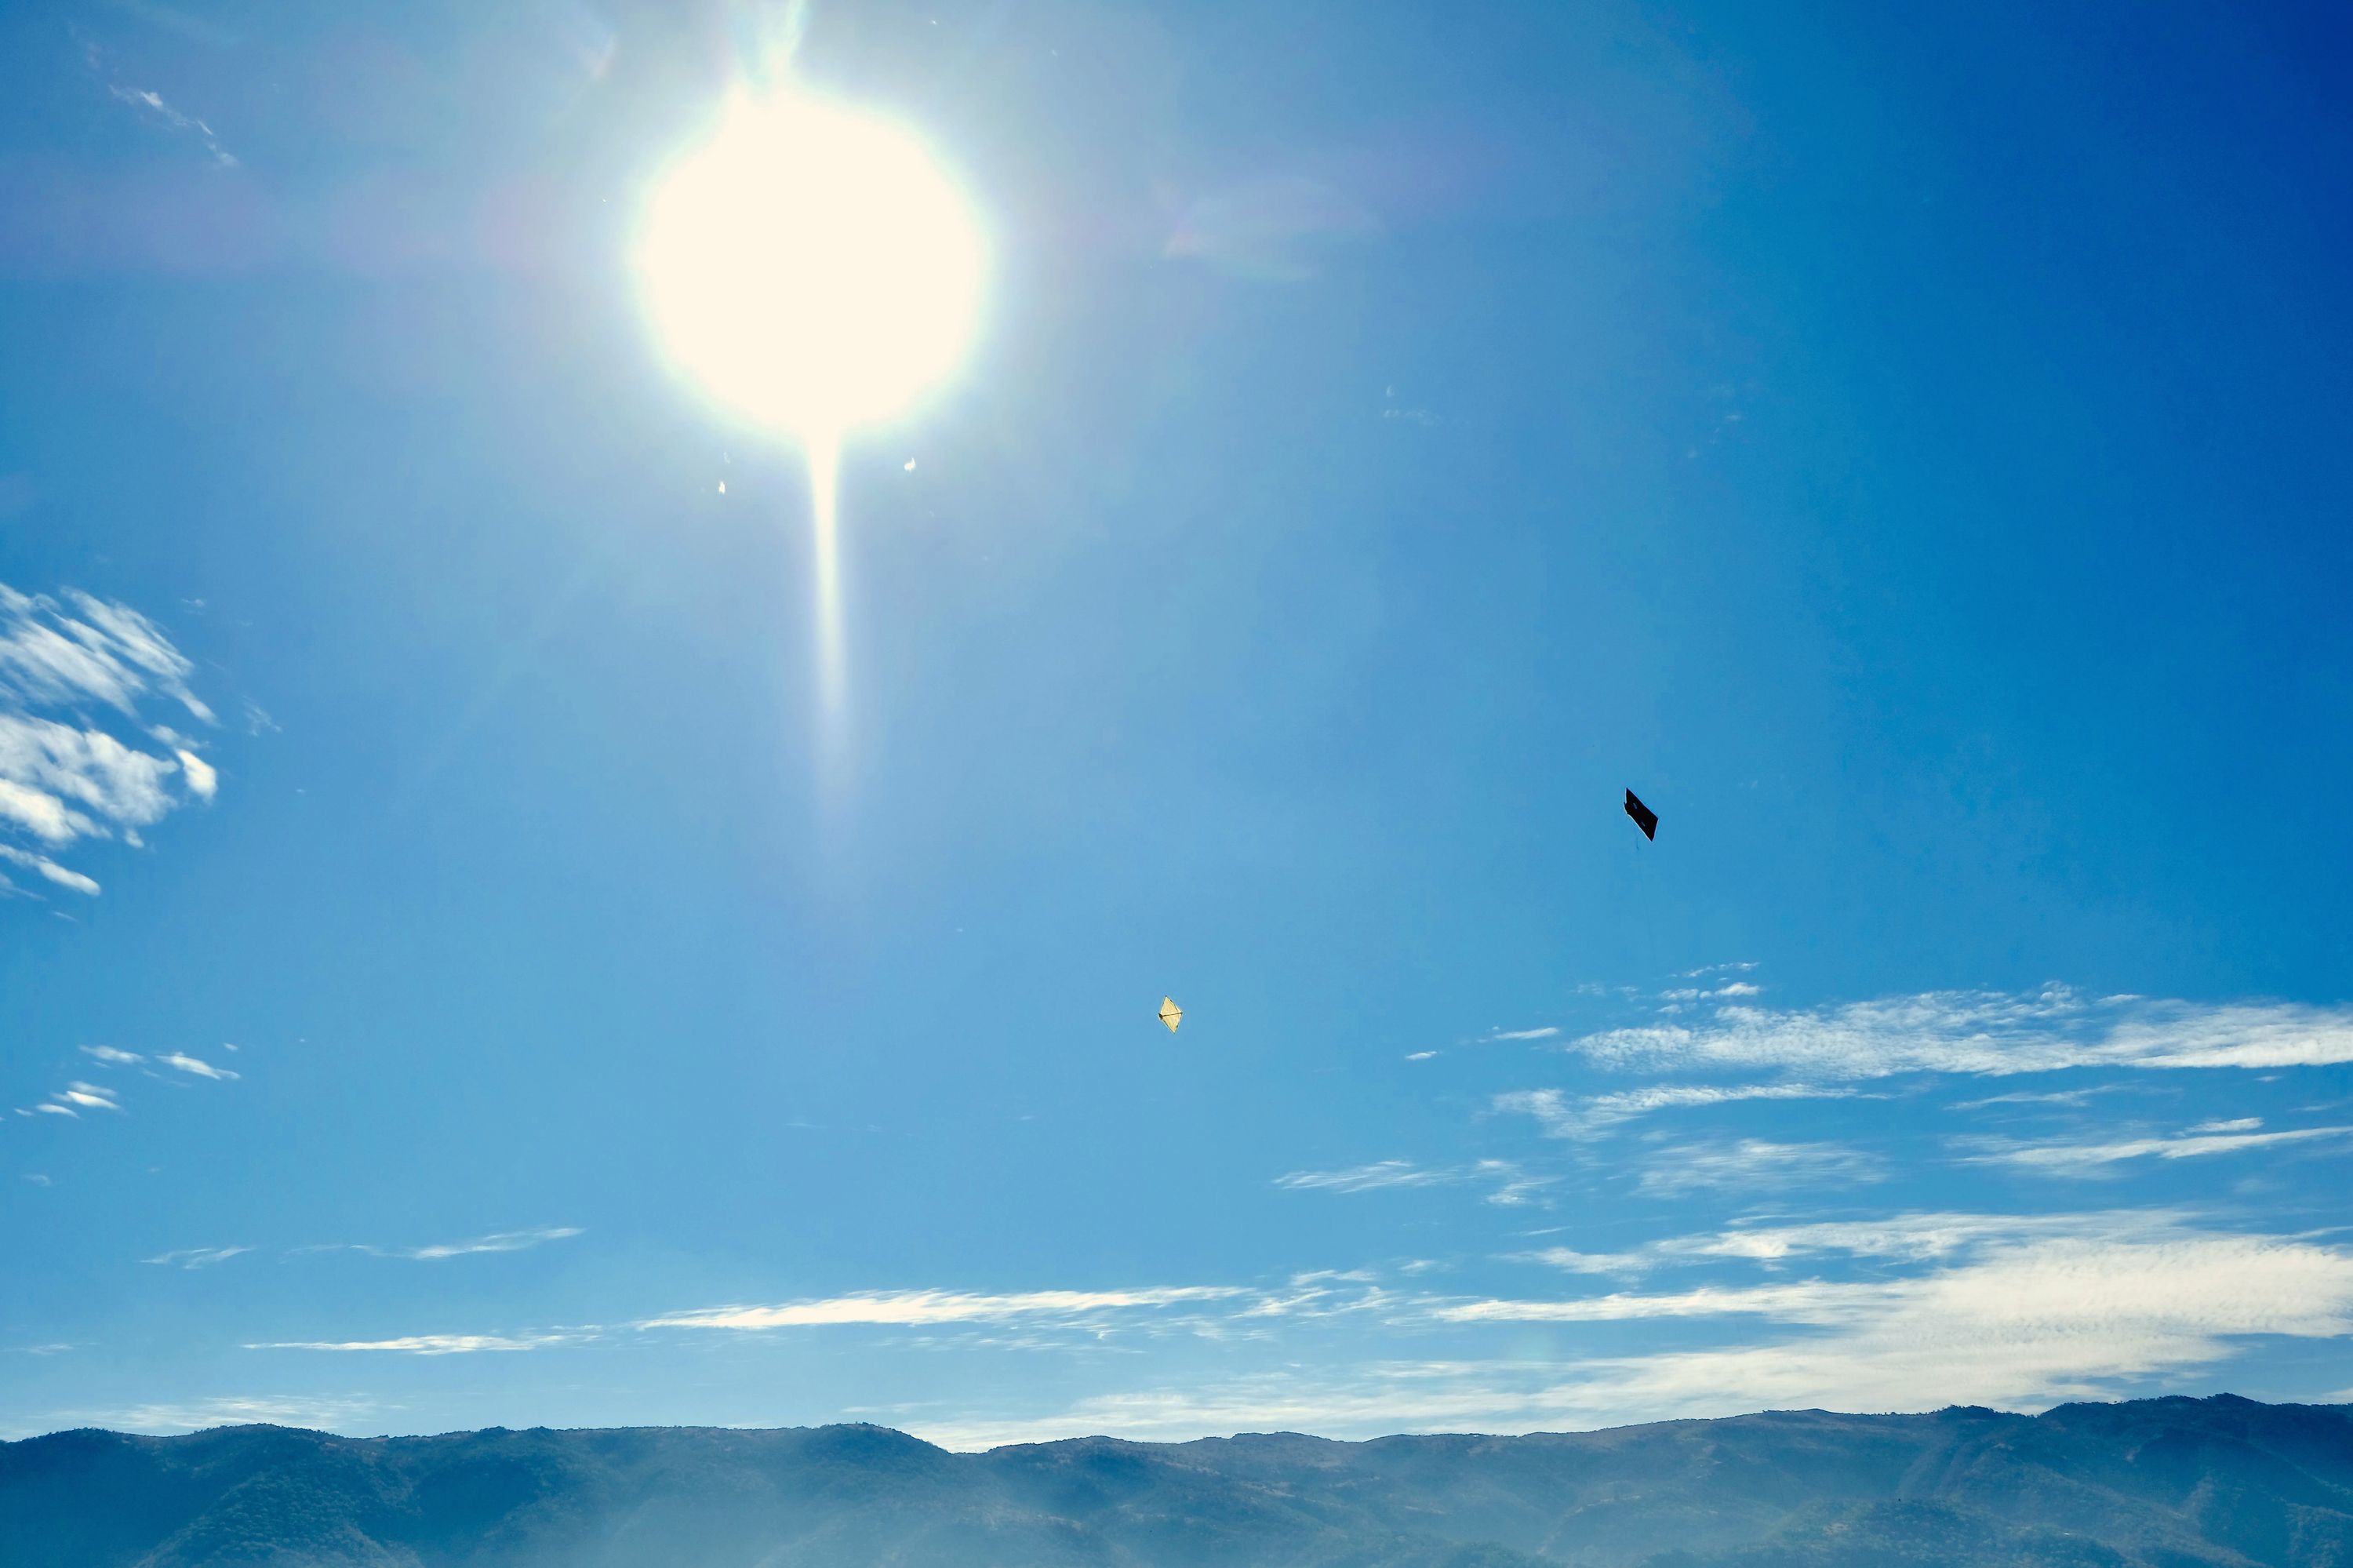 Two kites in the Pushkar sky, Rajasthan, India. January 2021.